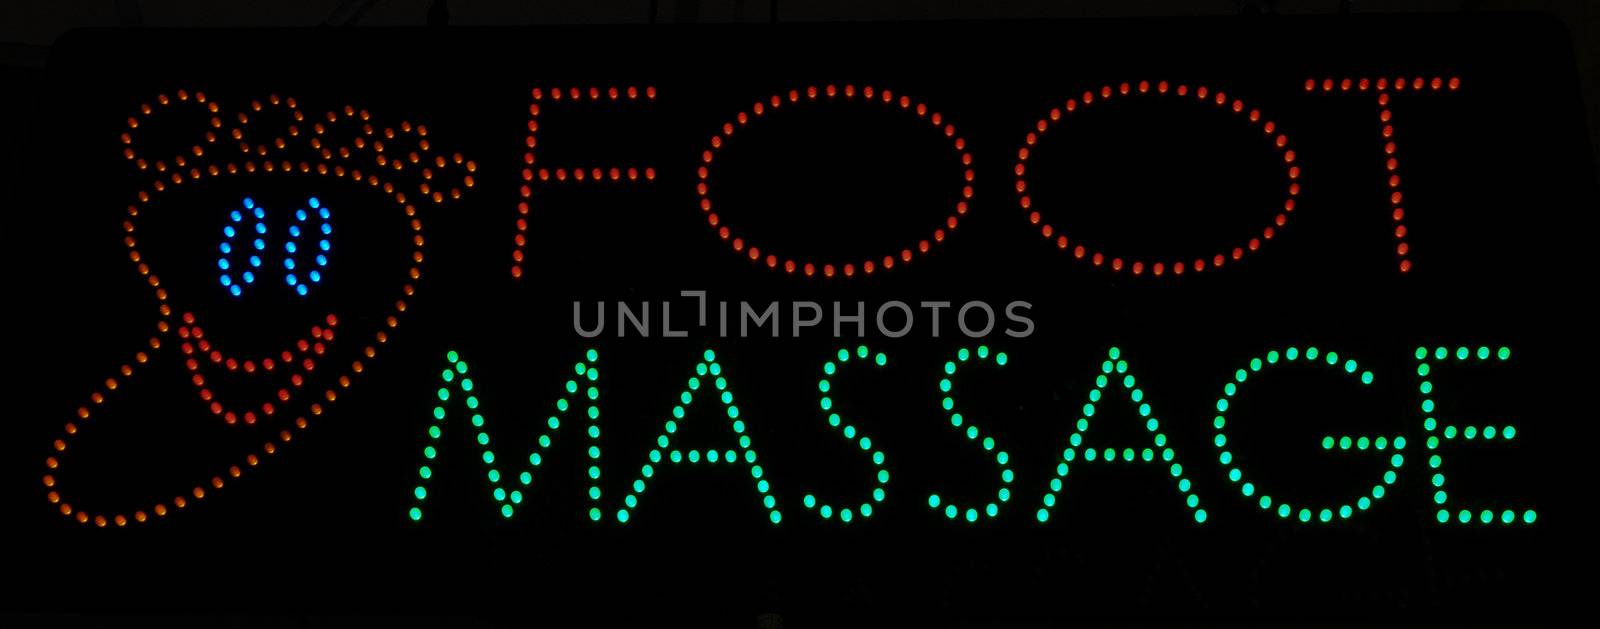 Foot Massage Neon Light Sign Background